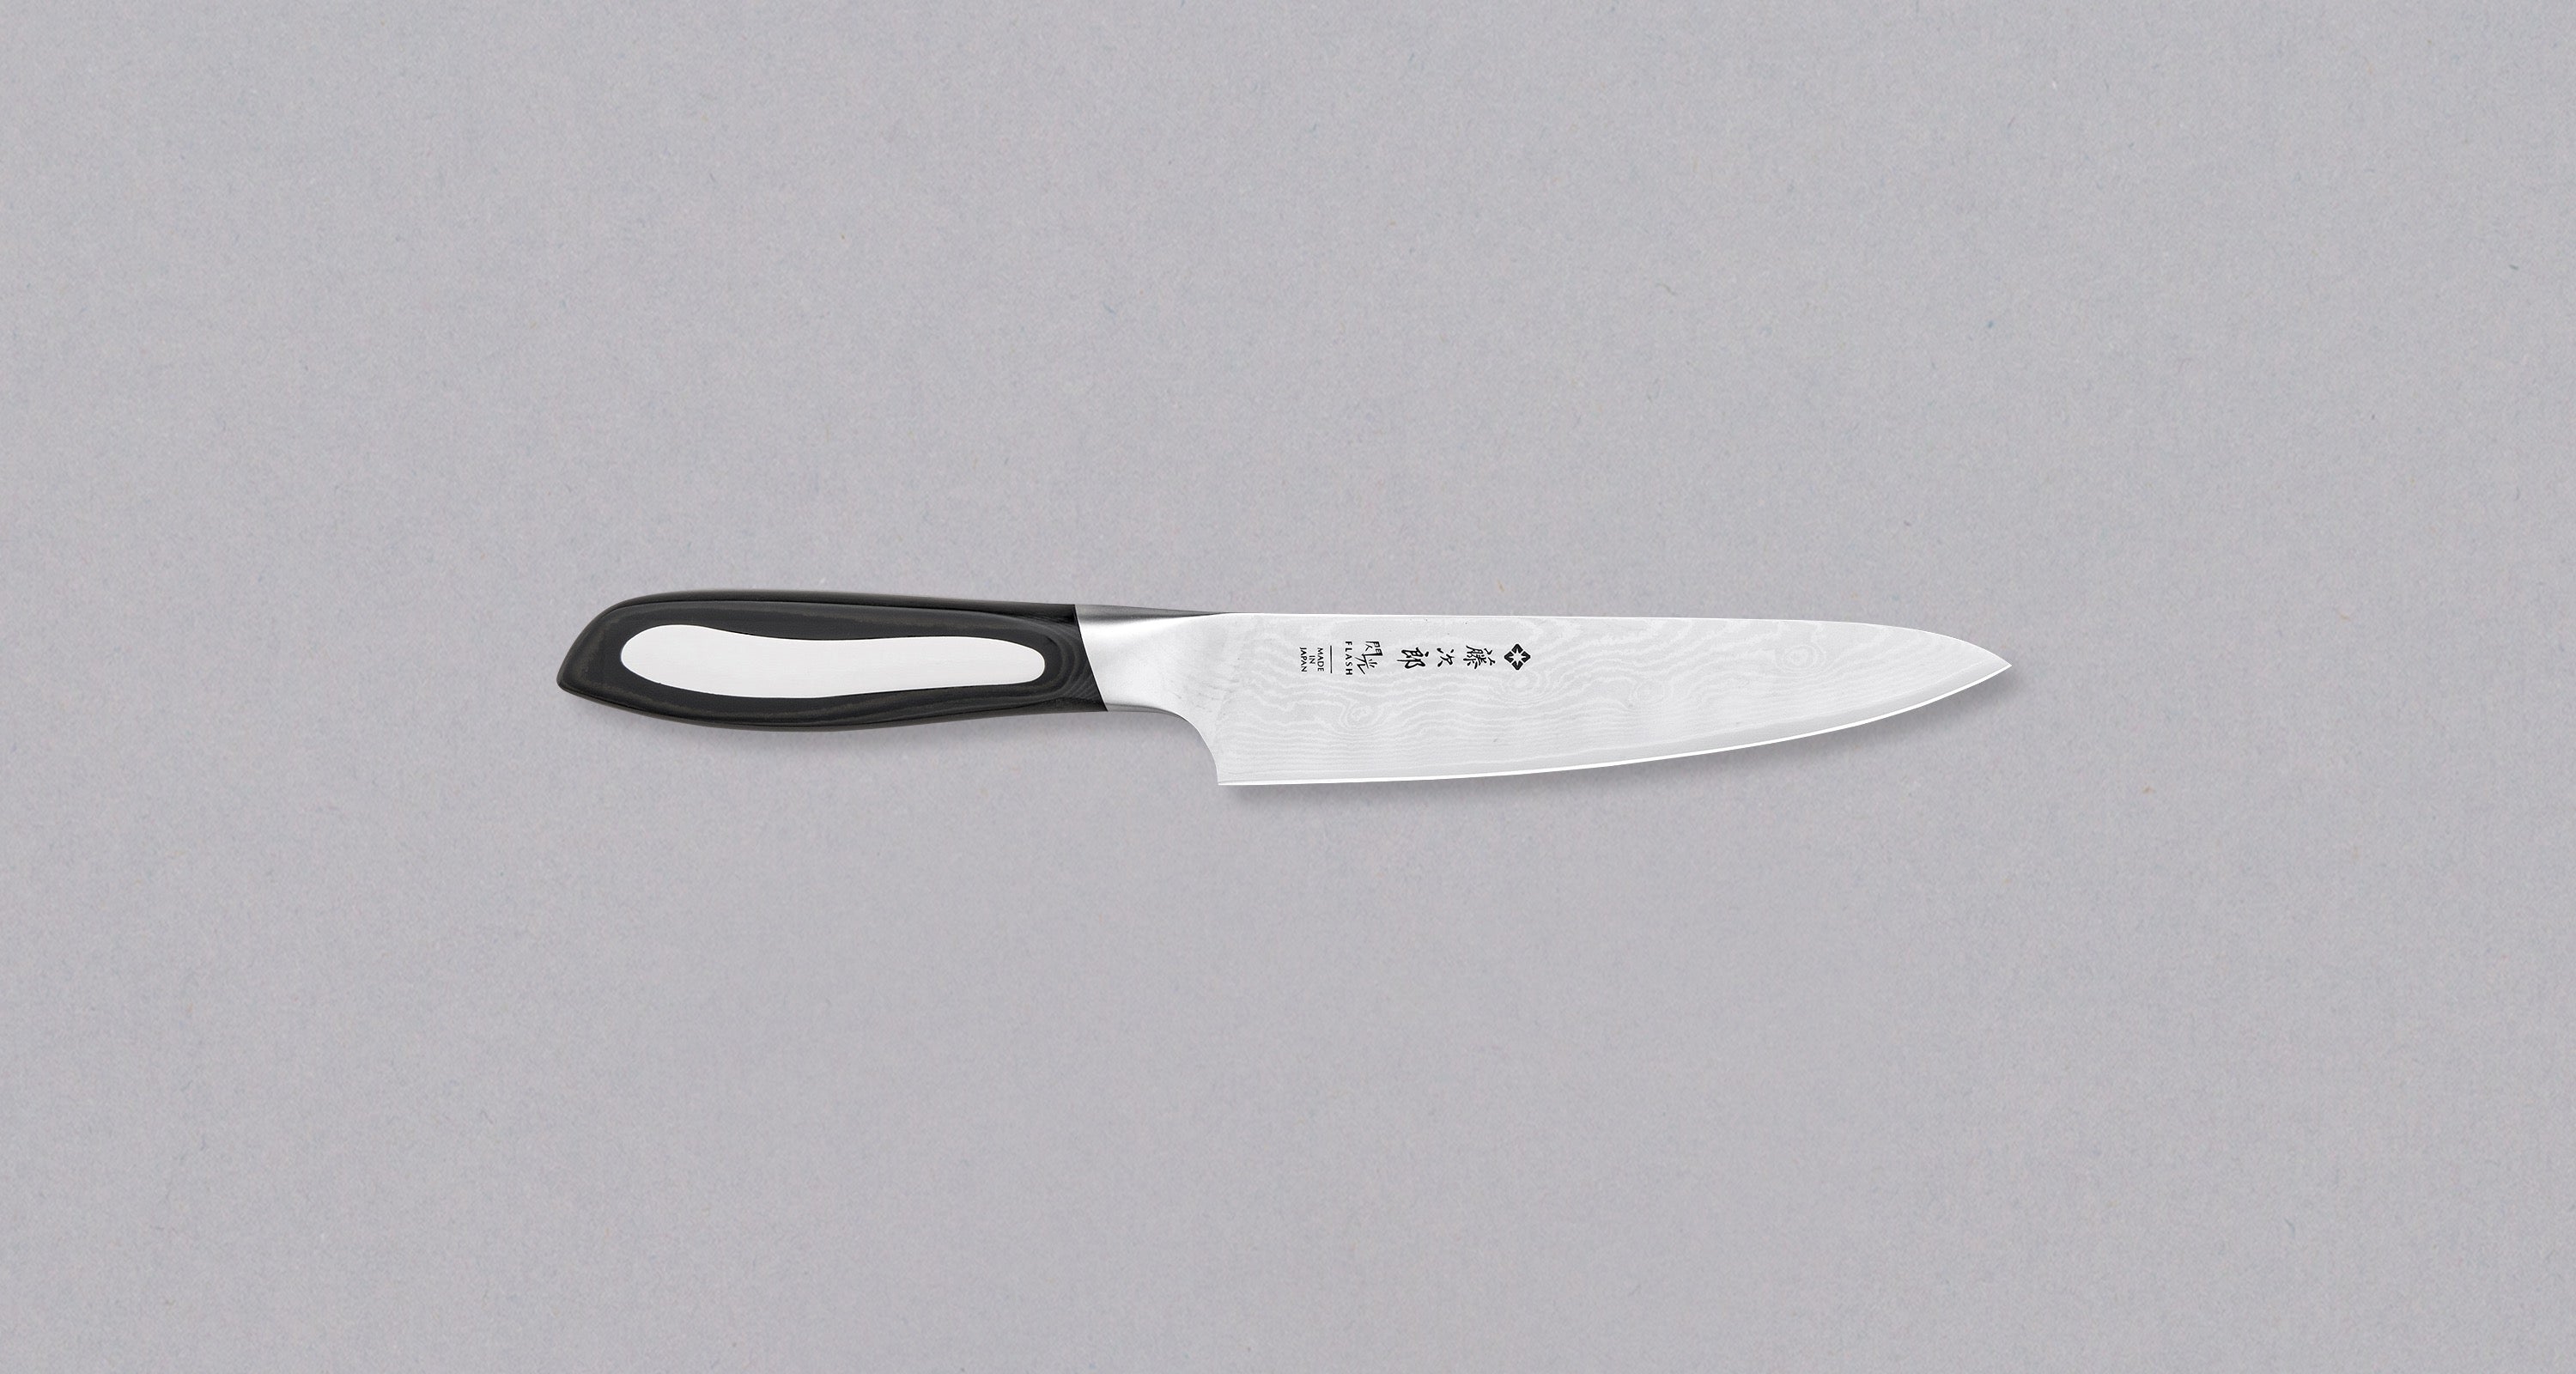 Cuchillo japonés Multiuso Tojiro Flash 100 mm (FF-PA100)